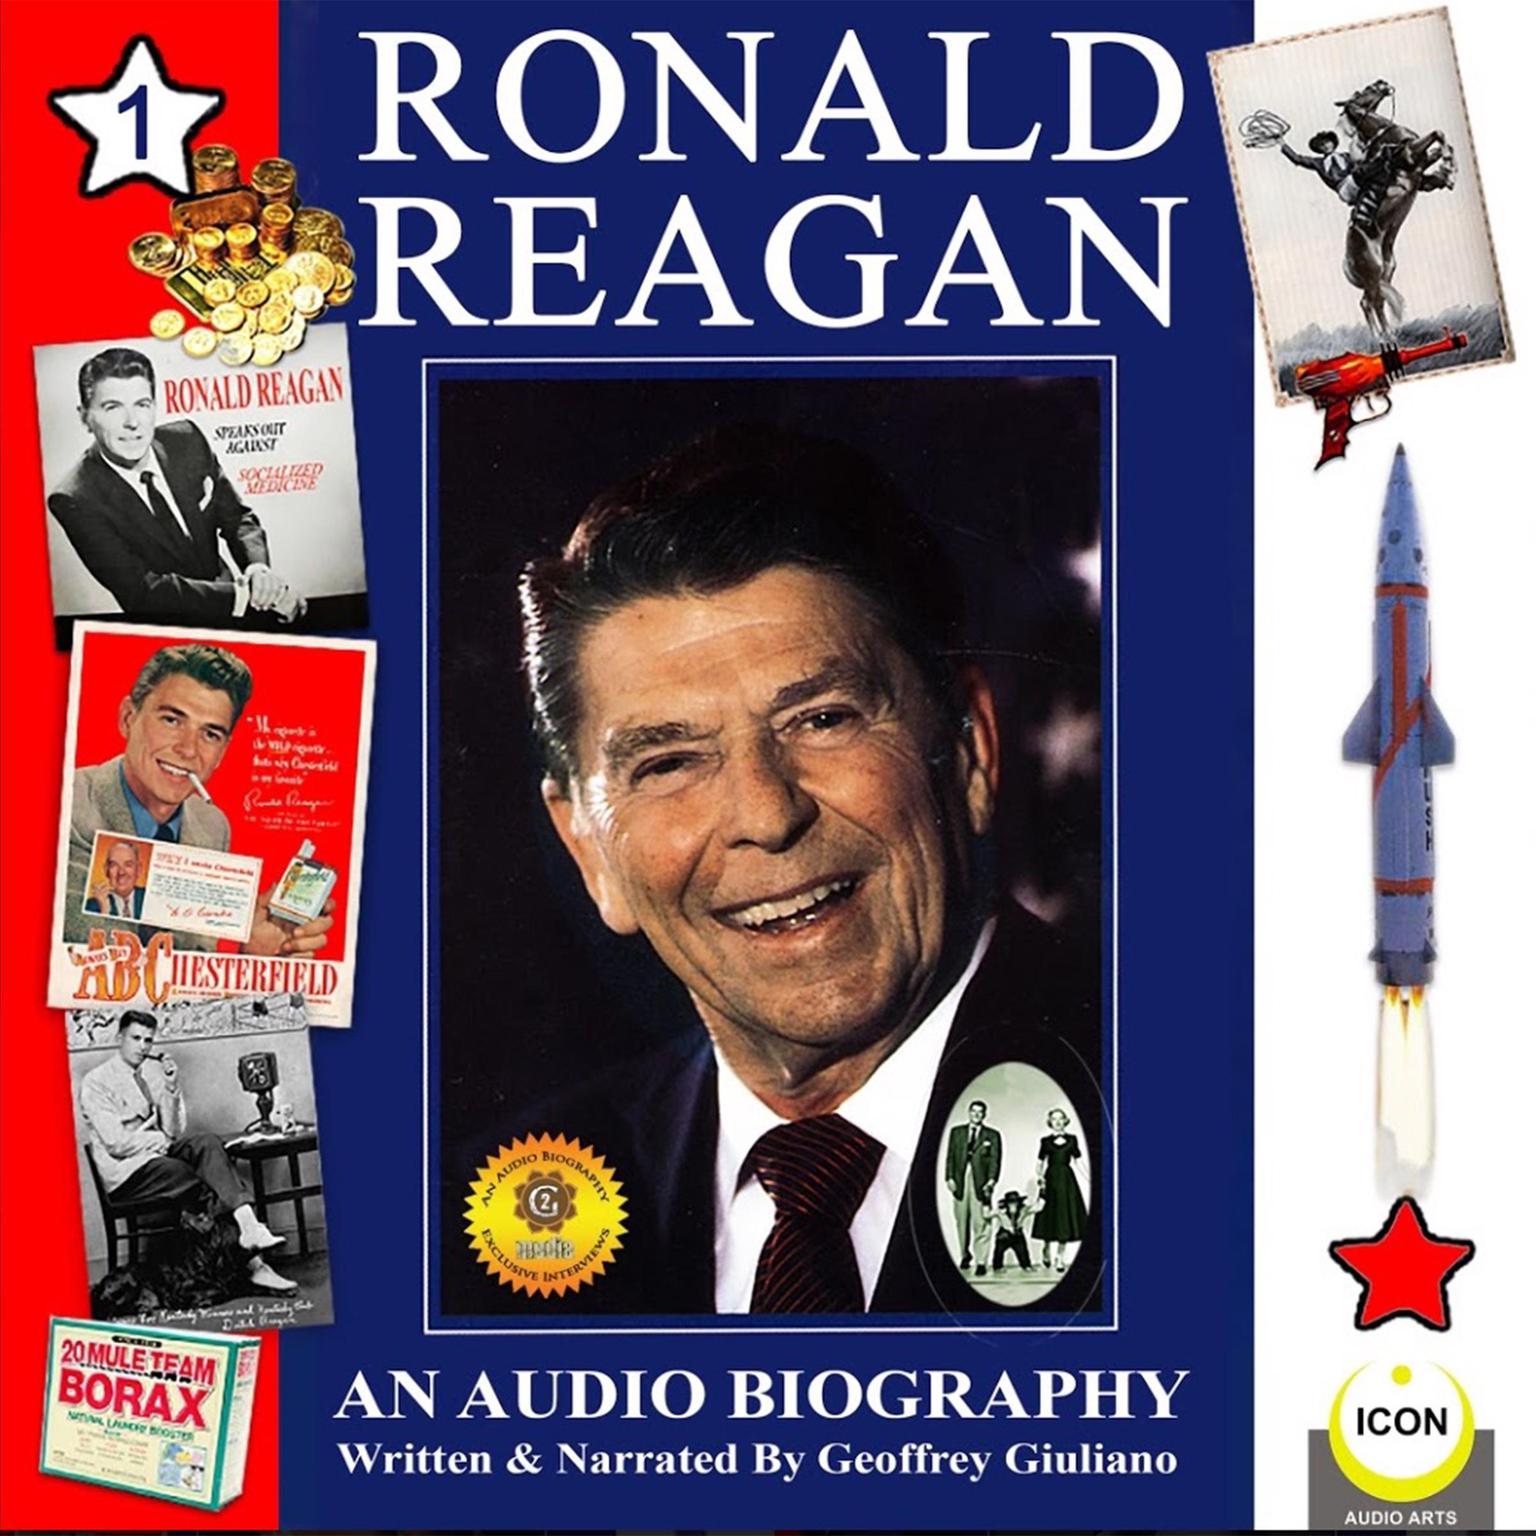 Ronald Reagan; An Audio Biography #1 Audiobook, by Geoffrey Giuliano